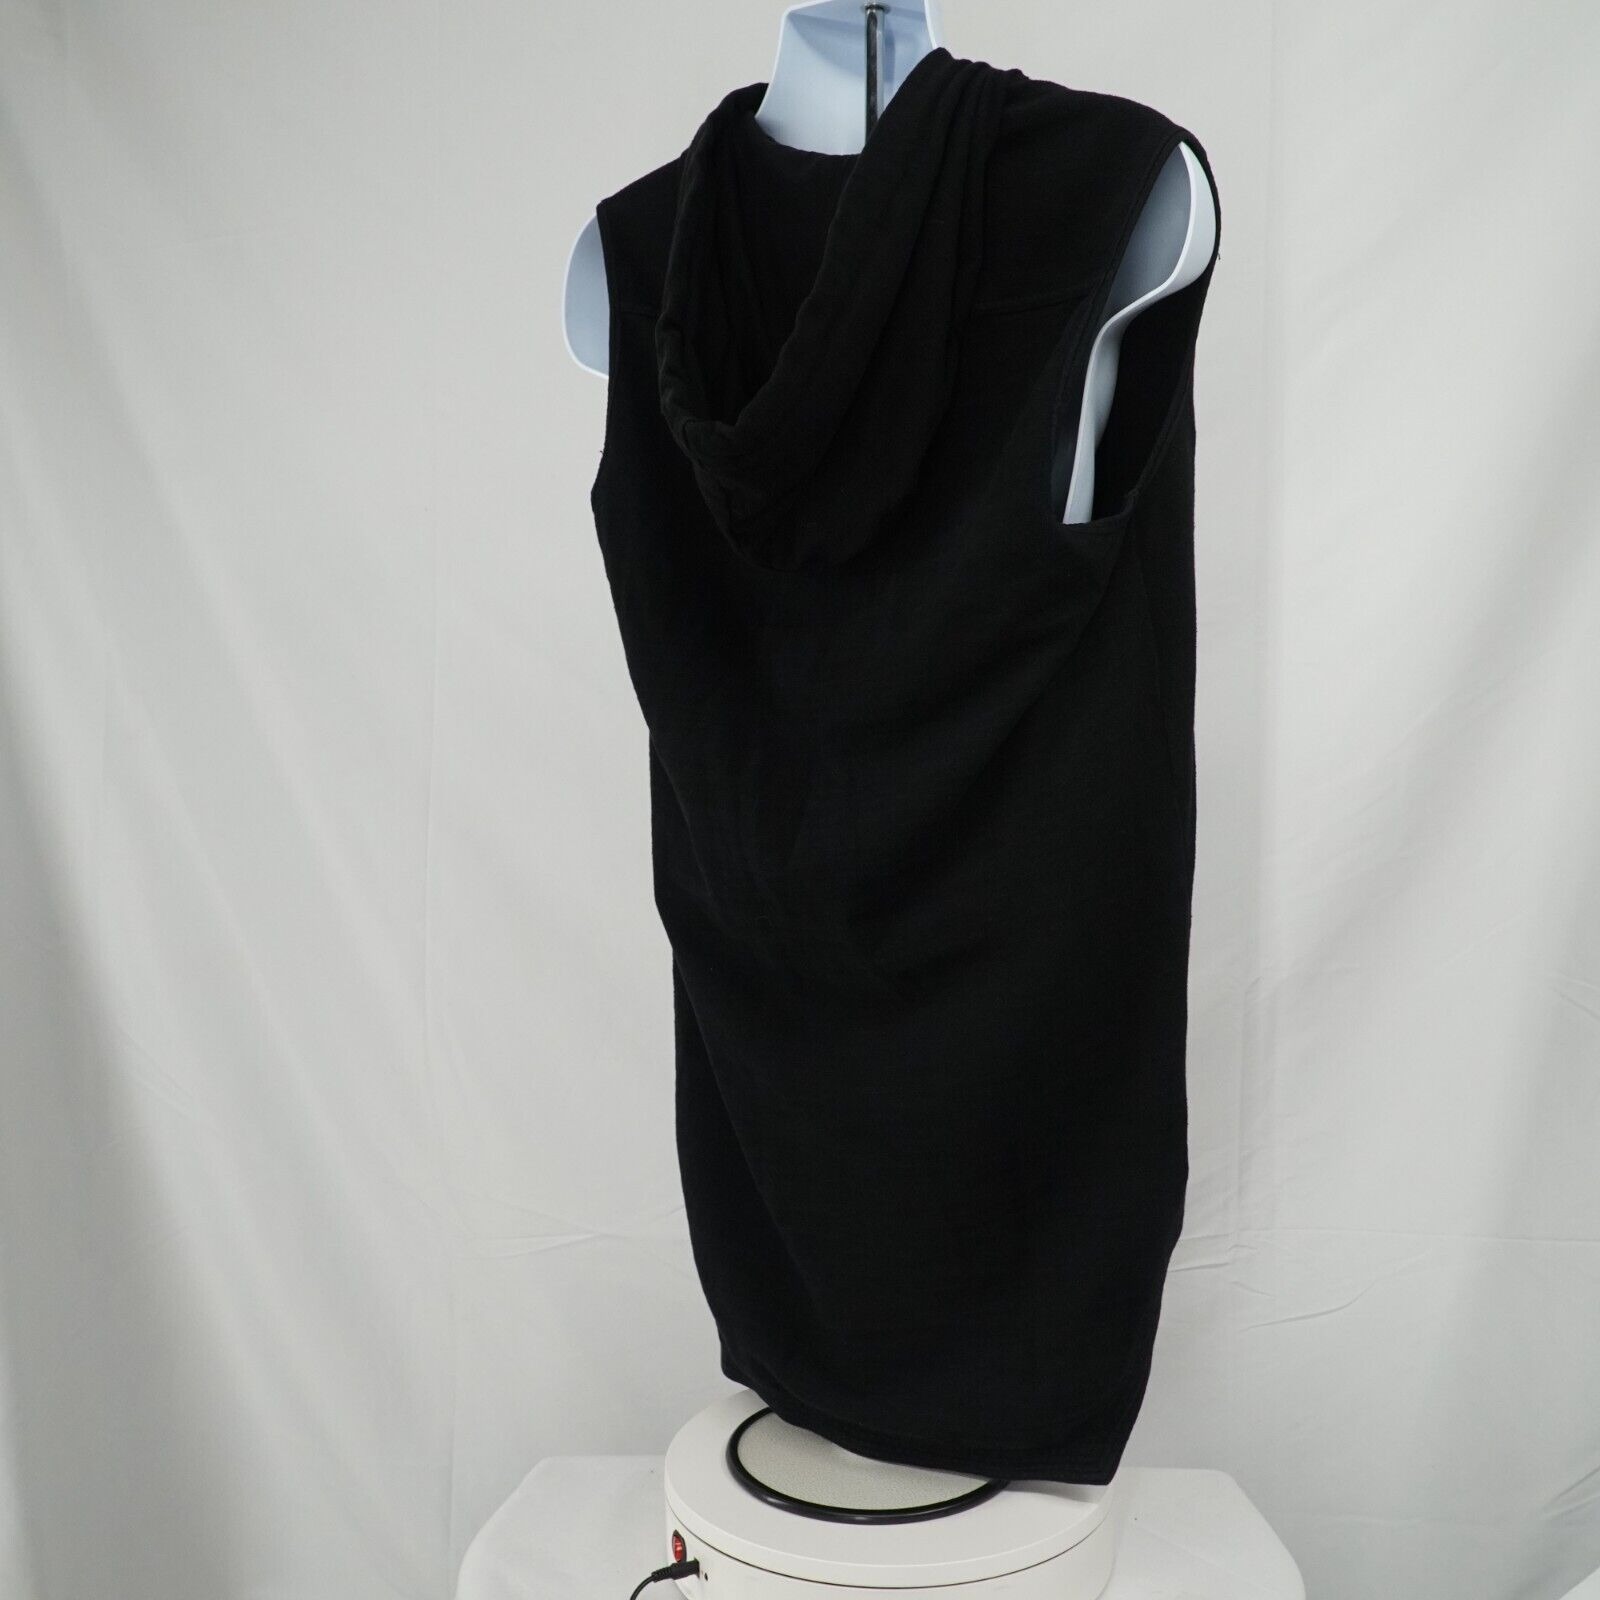 Black Zip Up Sleeveless Jacket Hoodie Cotton - Medium - 16